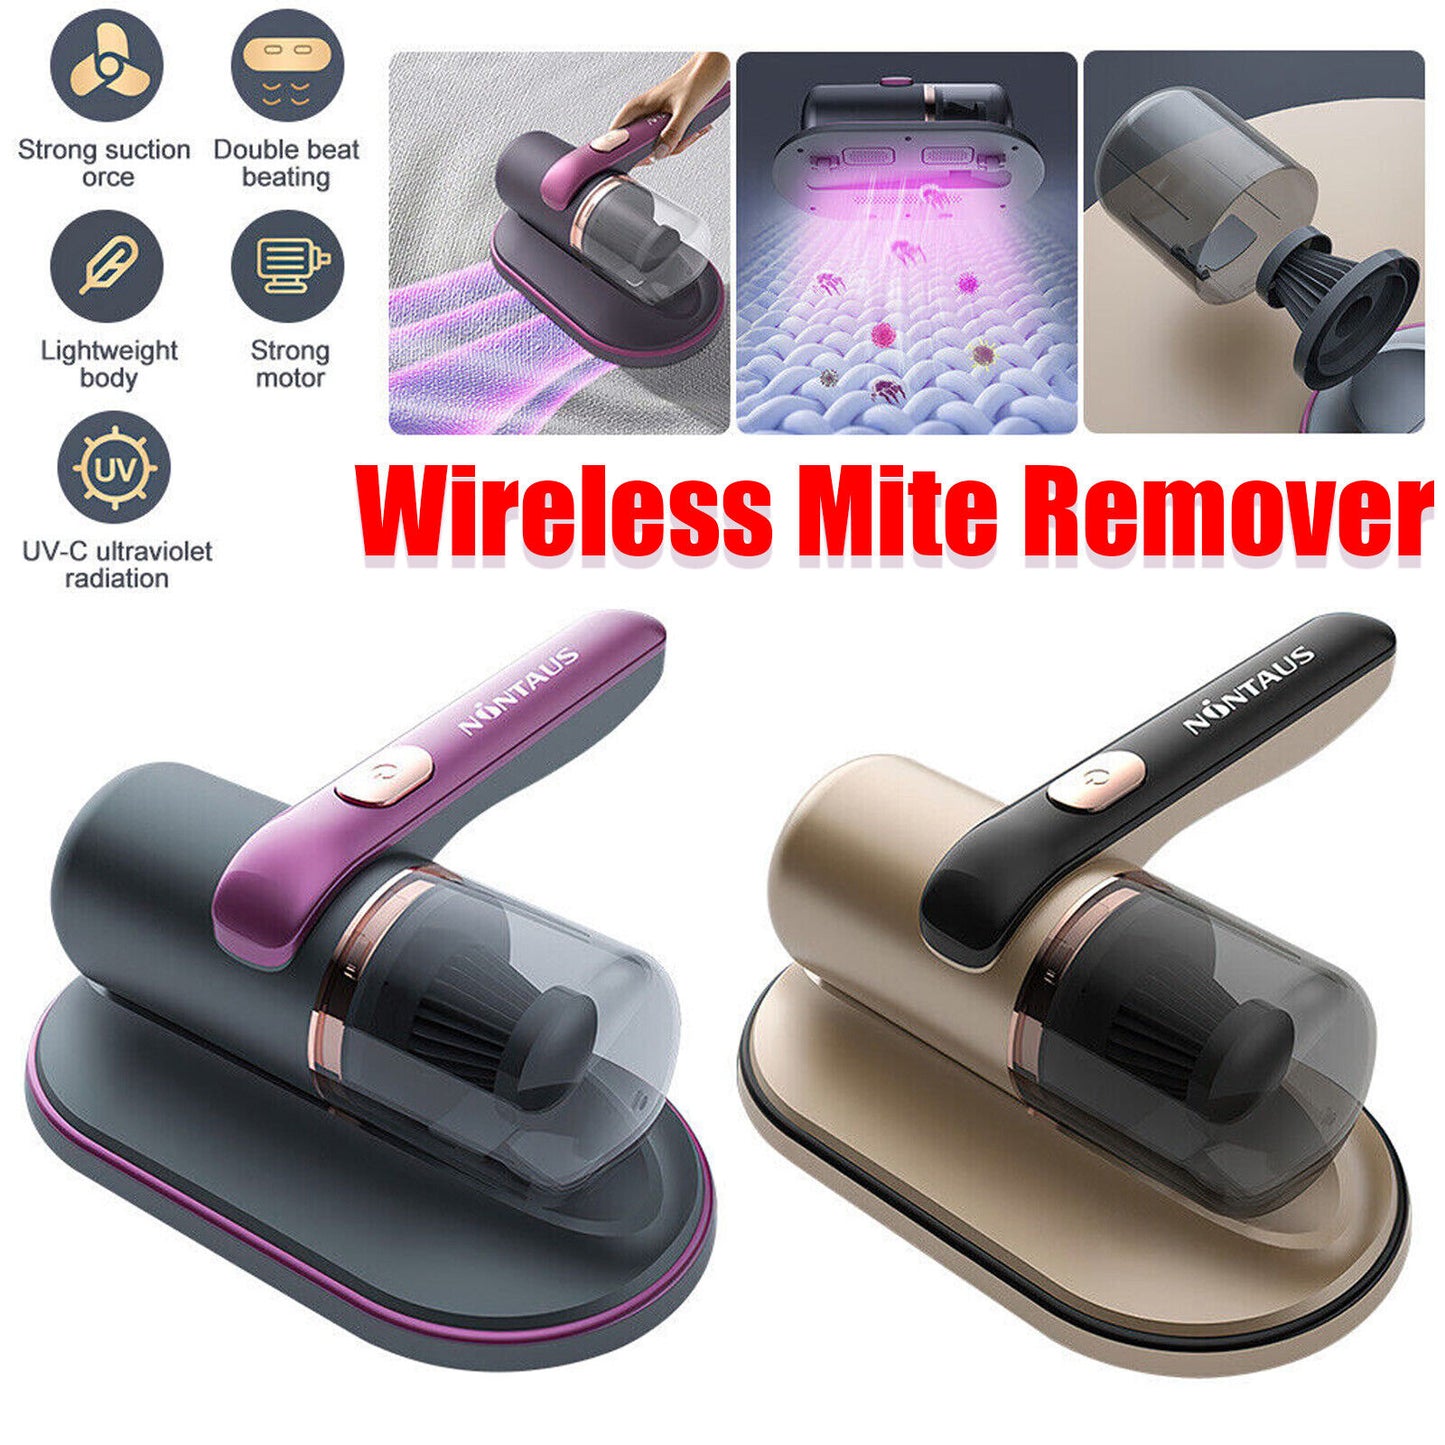 UltraPower UV-C Handheld Mite Vacuum: Wireless Sterilization and Filtration System